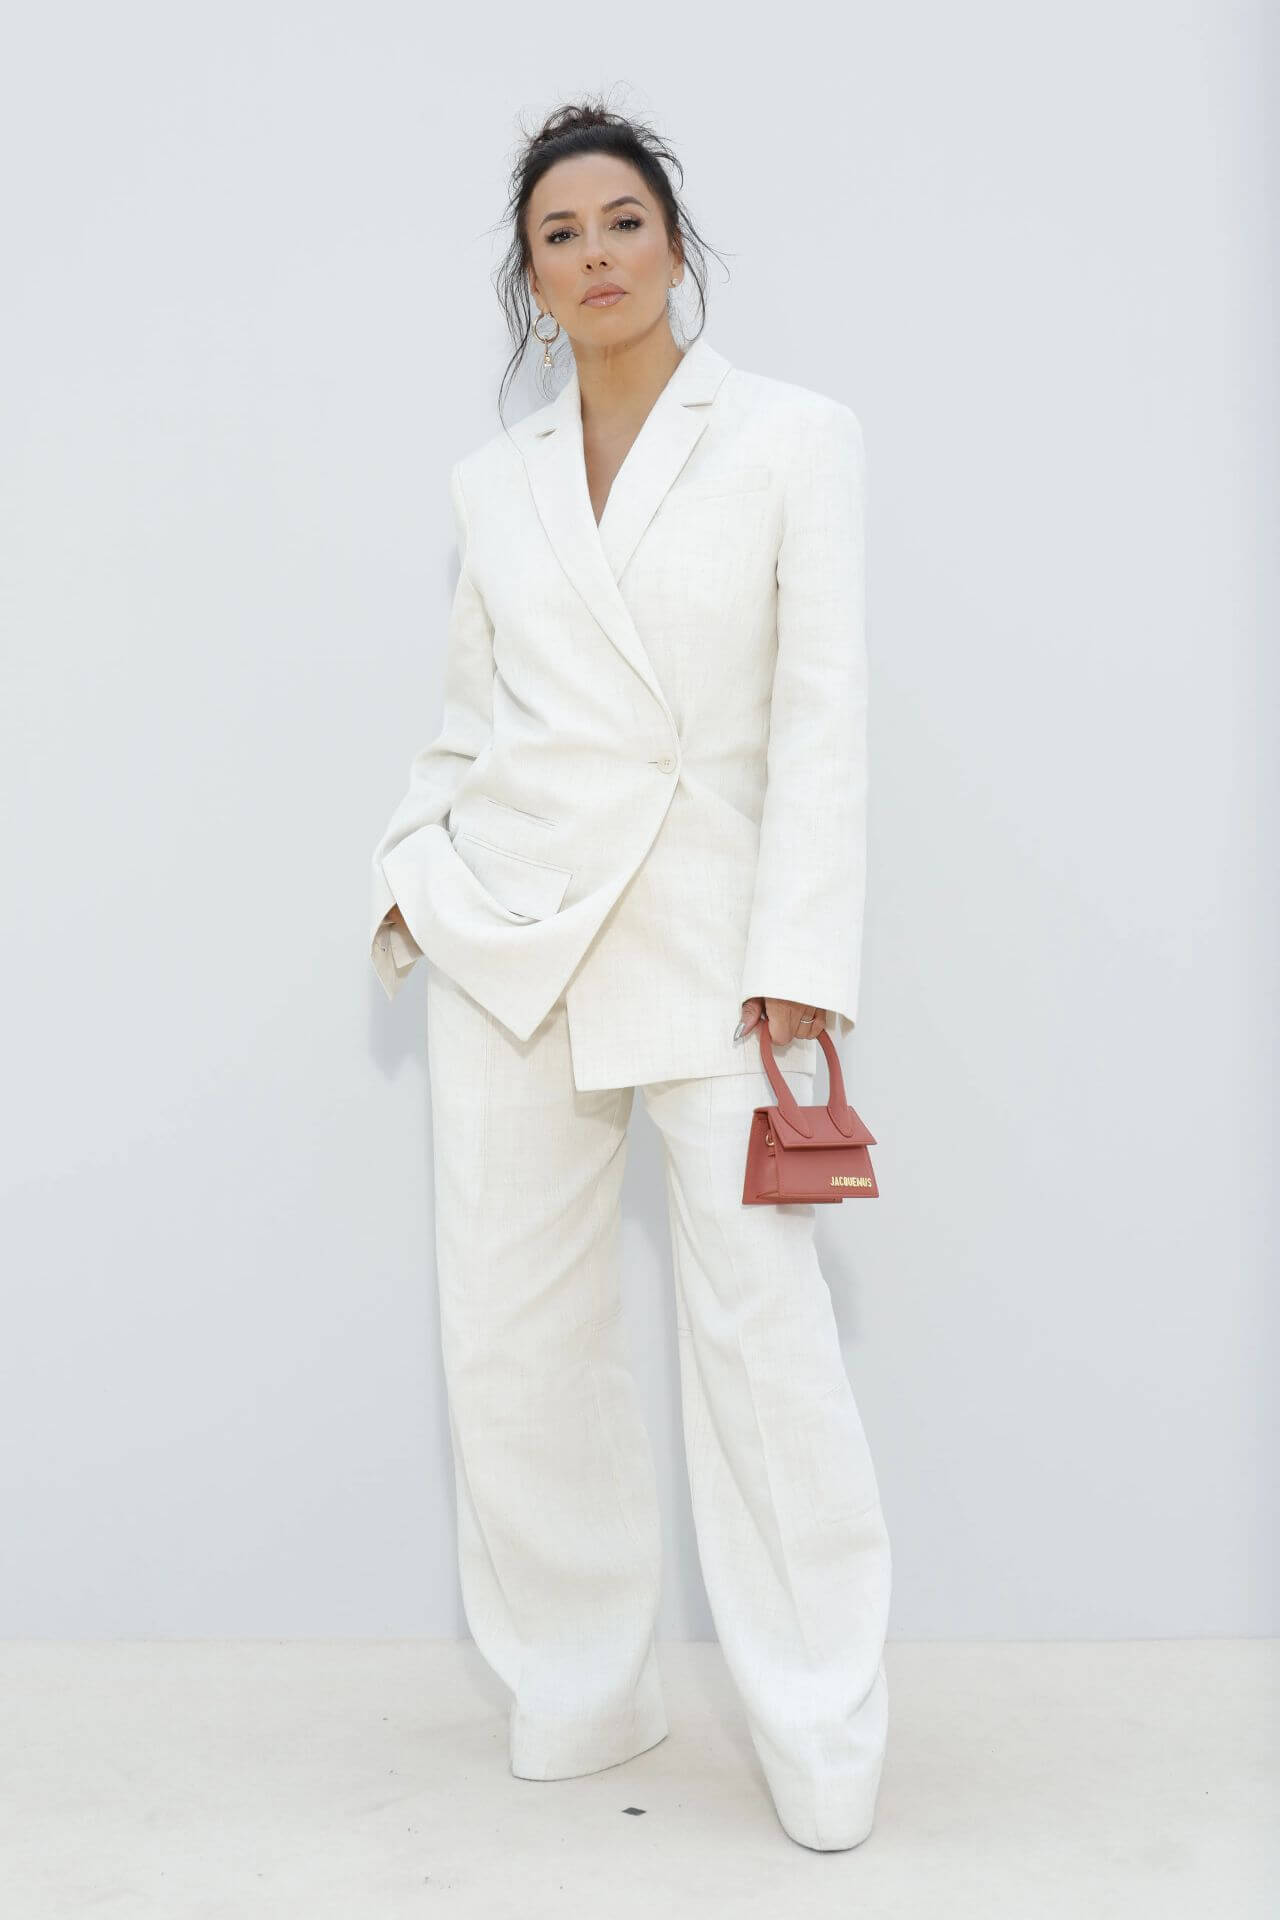 Eva Longoria In White Blazer With Pants